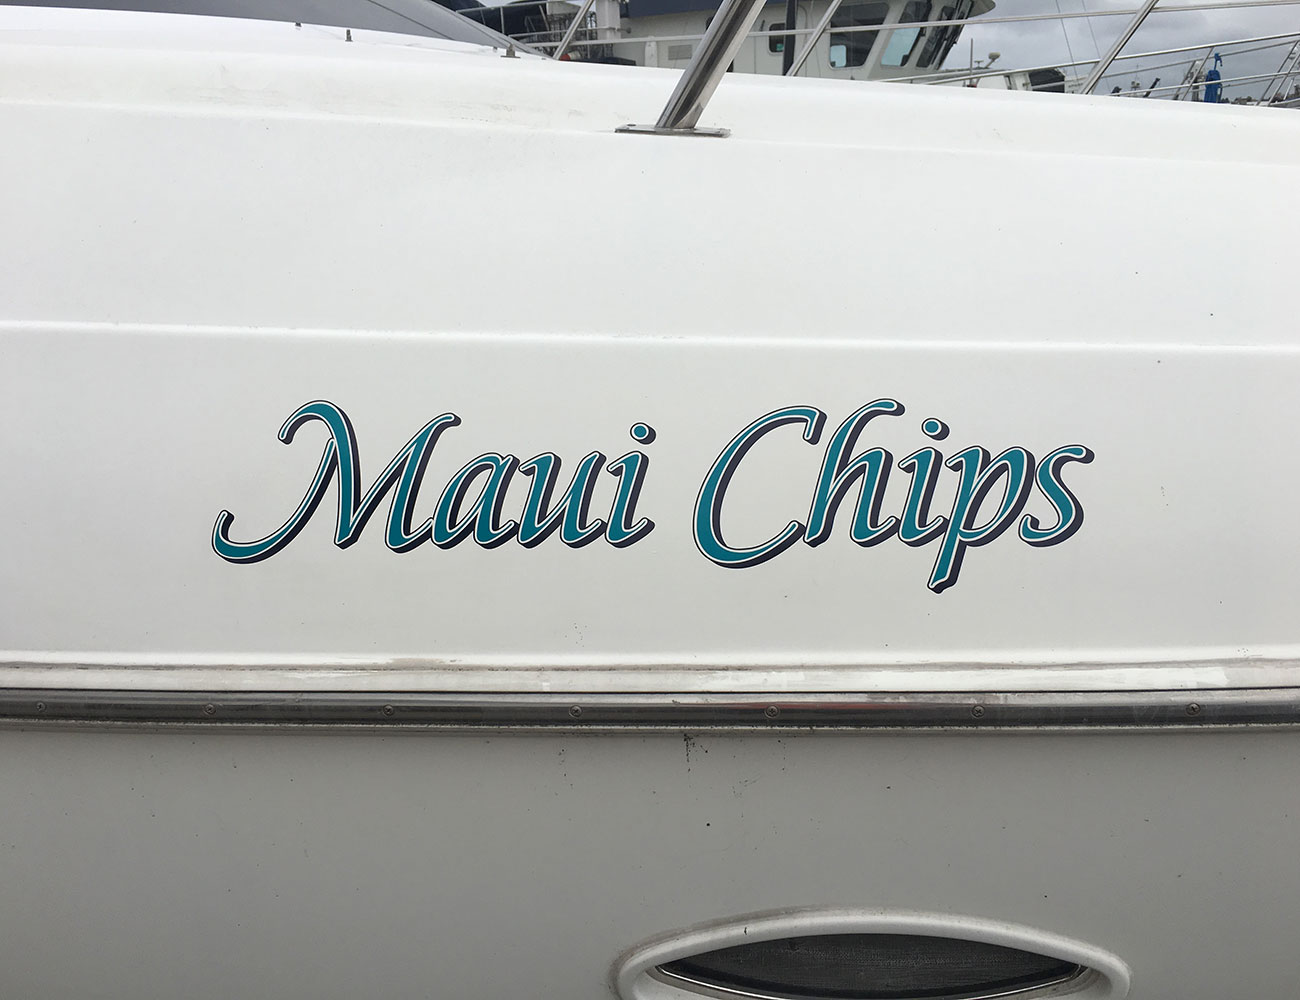 Margaux-Marine-Graphics-Maui-Chips-01